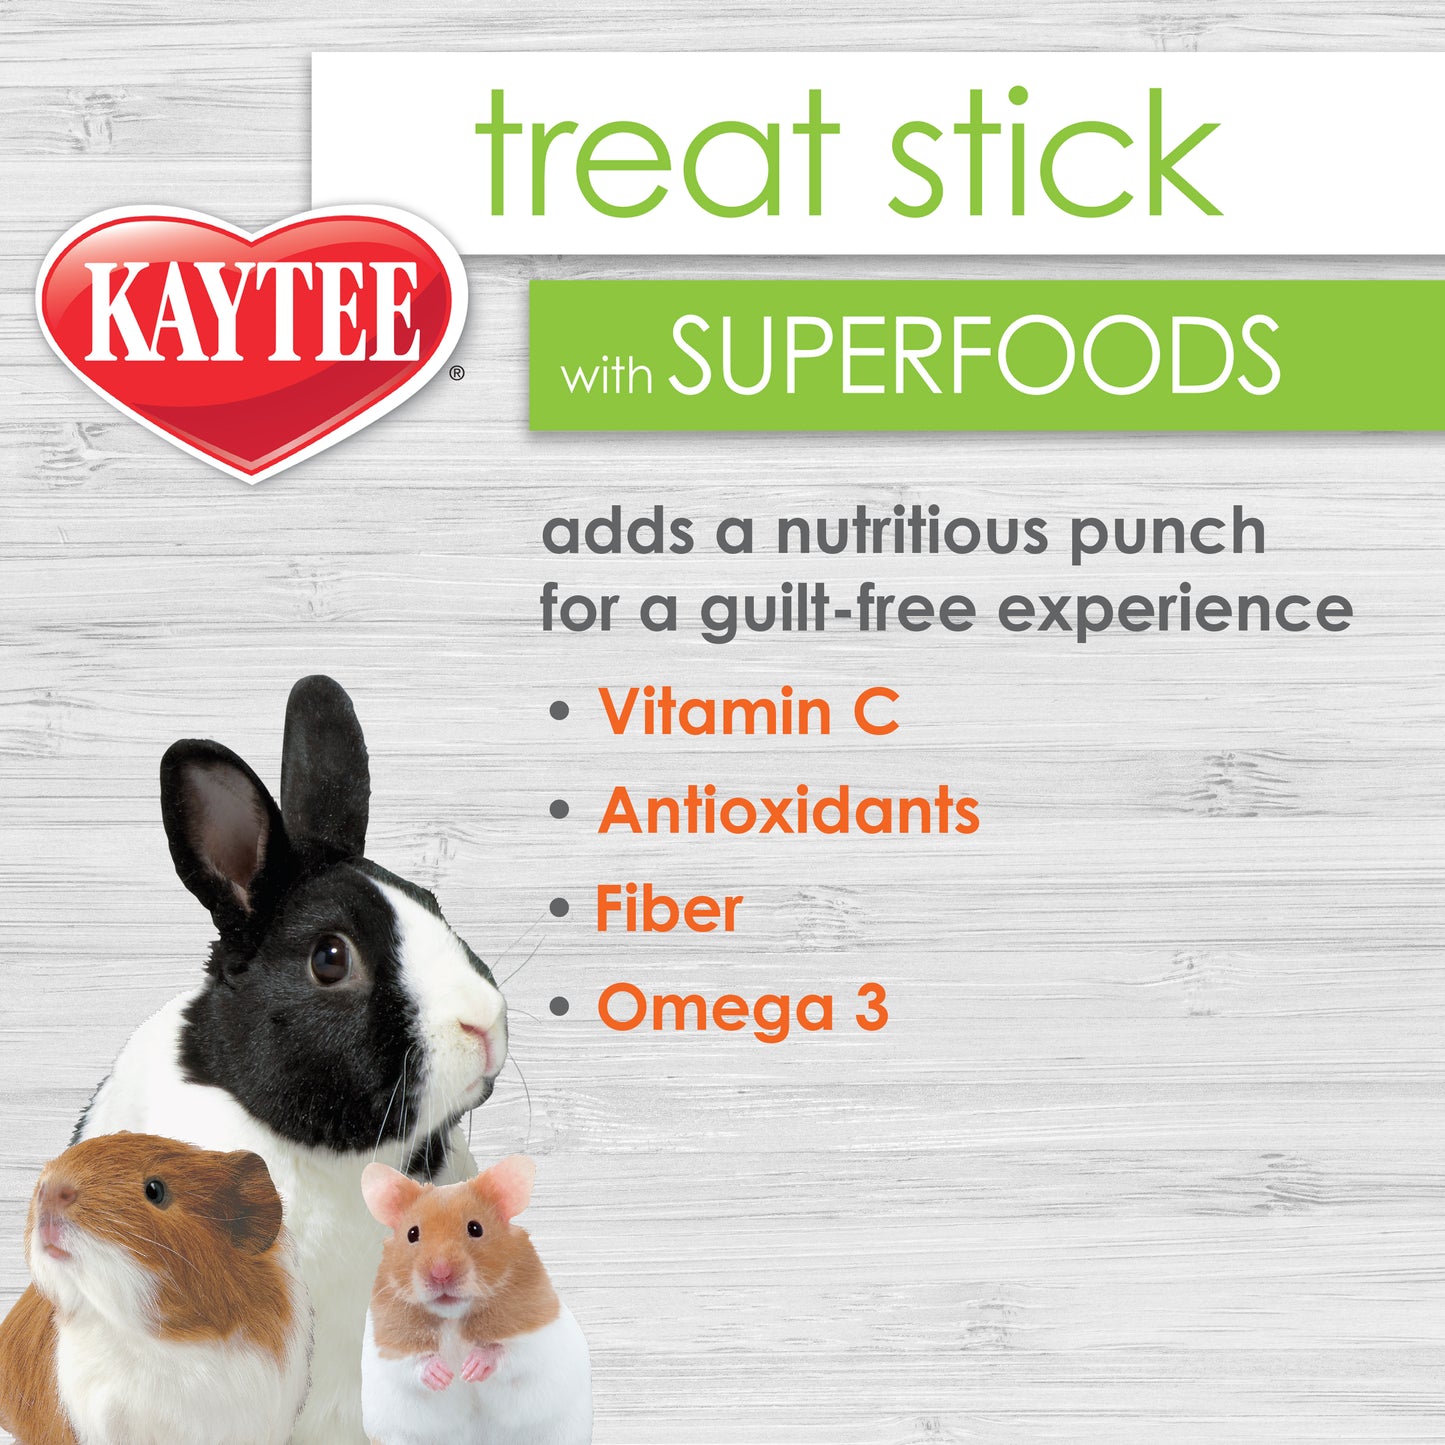 Kaytee Superfood Treat Stick With Superfoods Flax & Strawberry 5.5-oz, Small Animal Treat